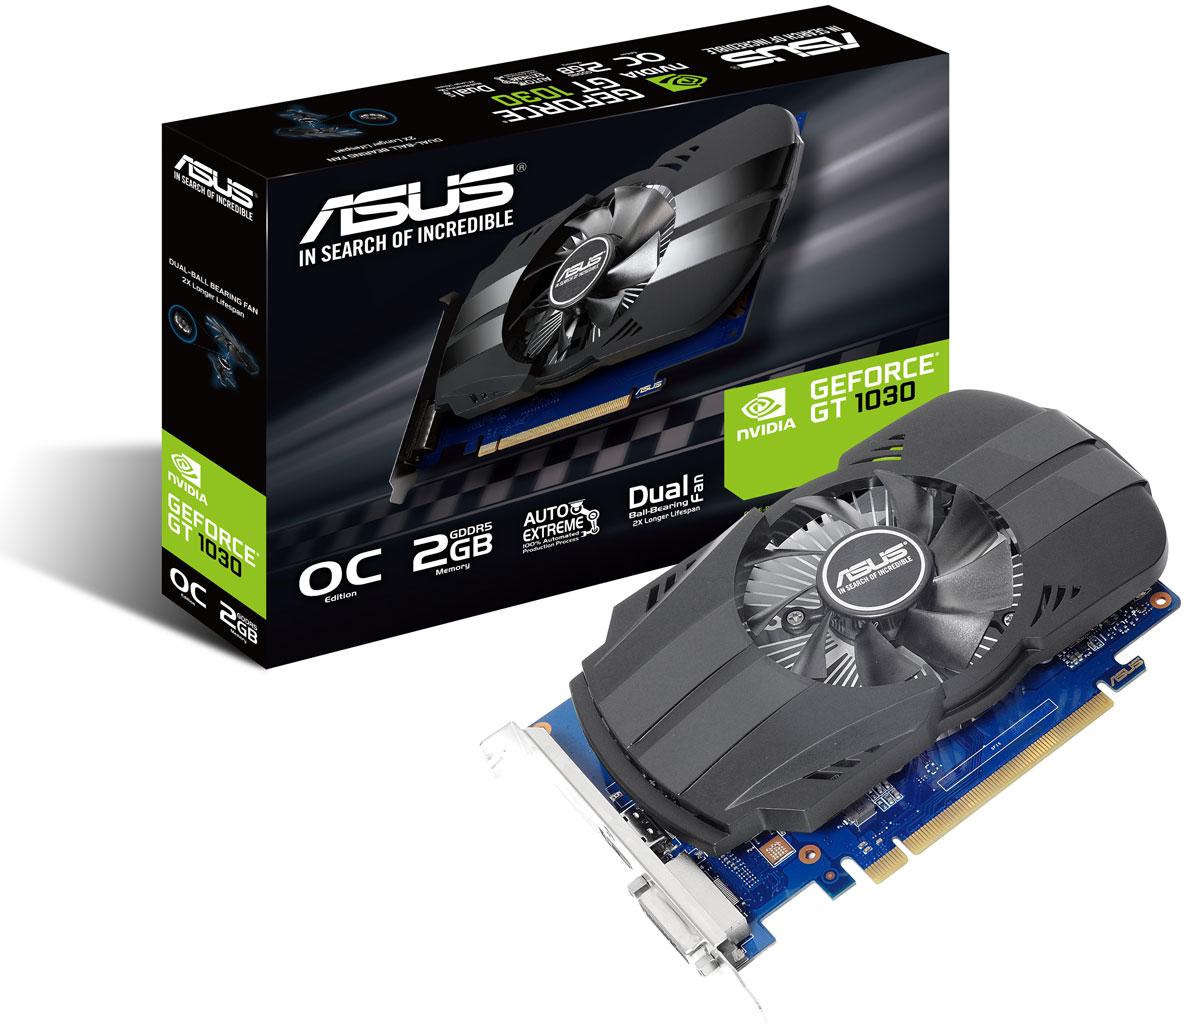 Asus Phoenix GeForce GT 1030 OC 2GB (PH-GT1030-O2G)